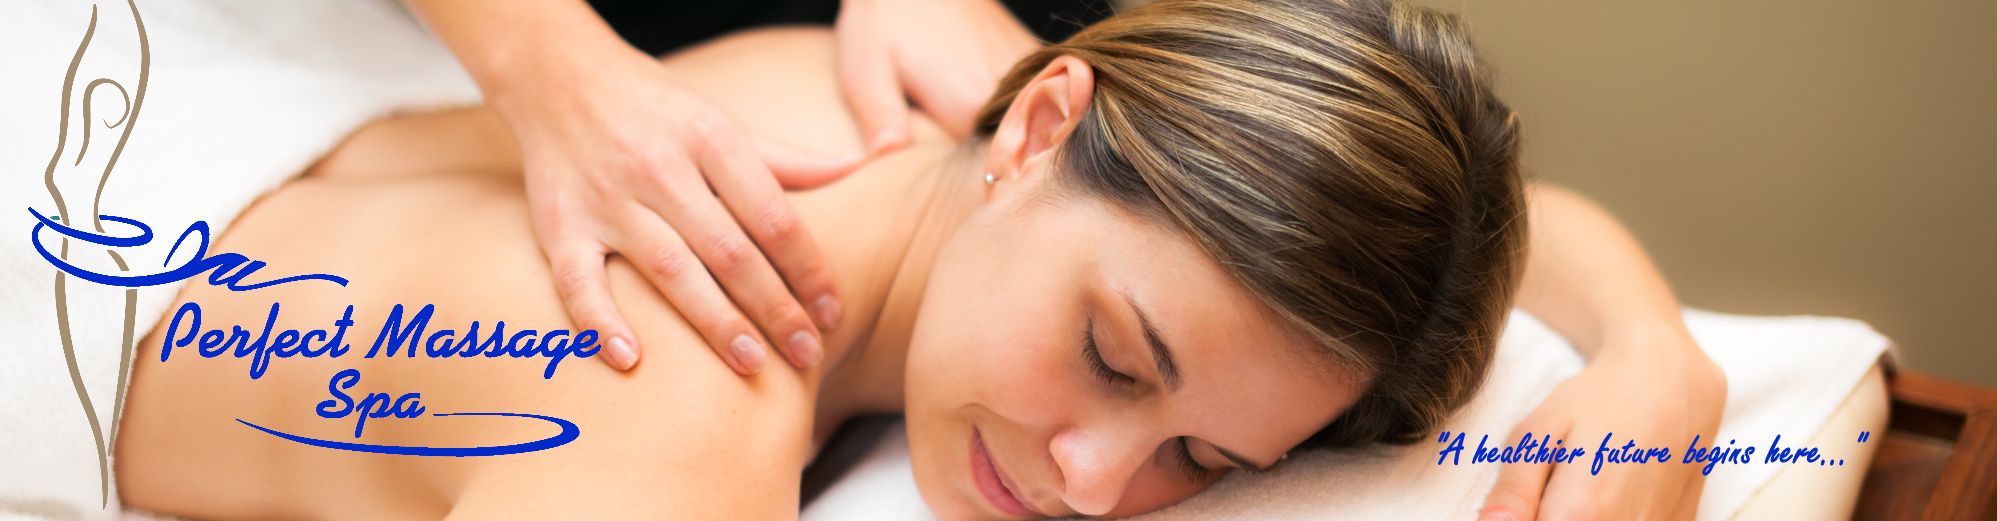 Website Banner - Woman being massaged